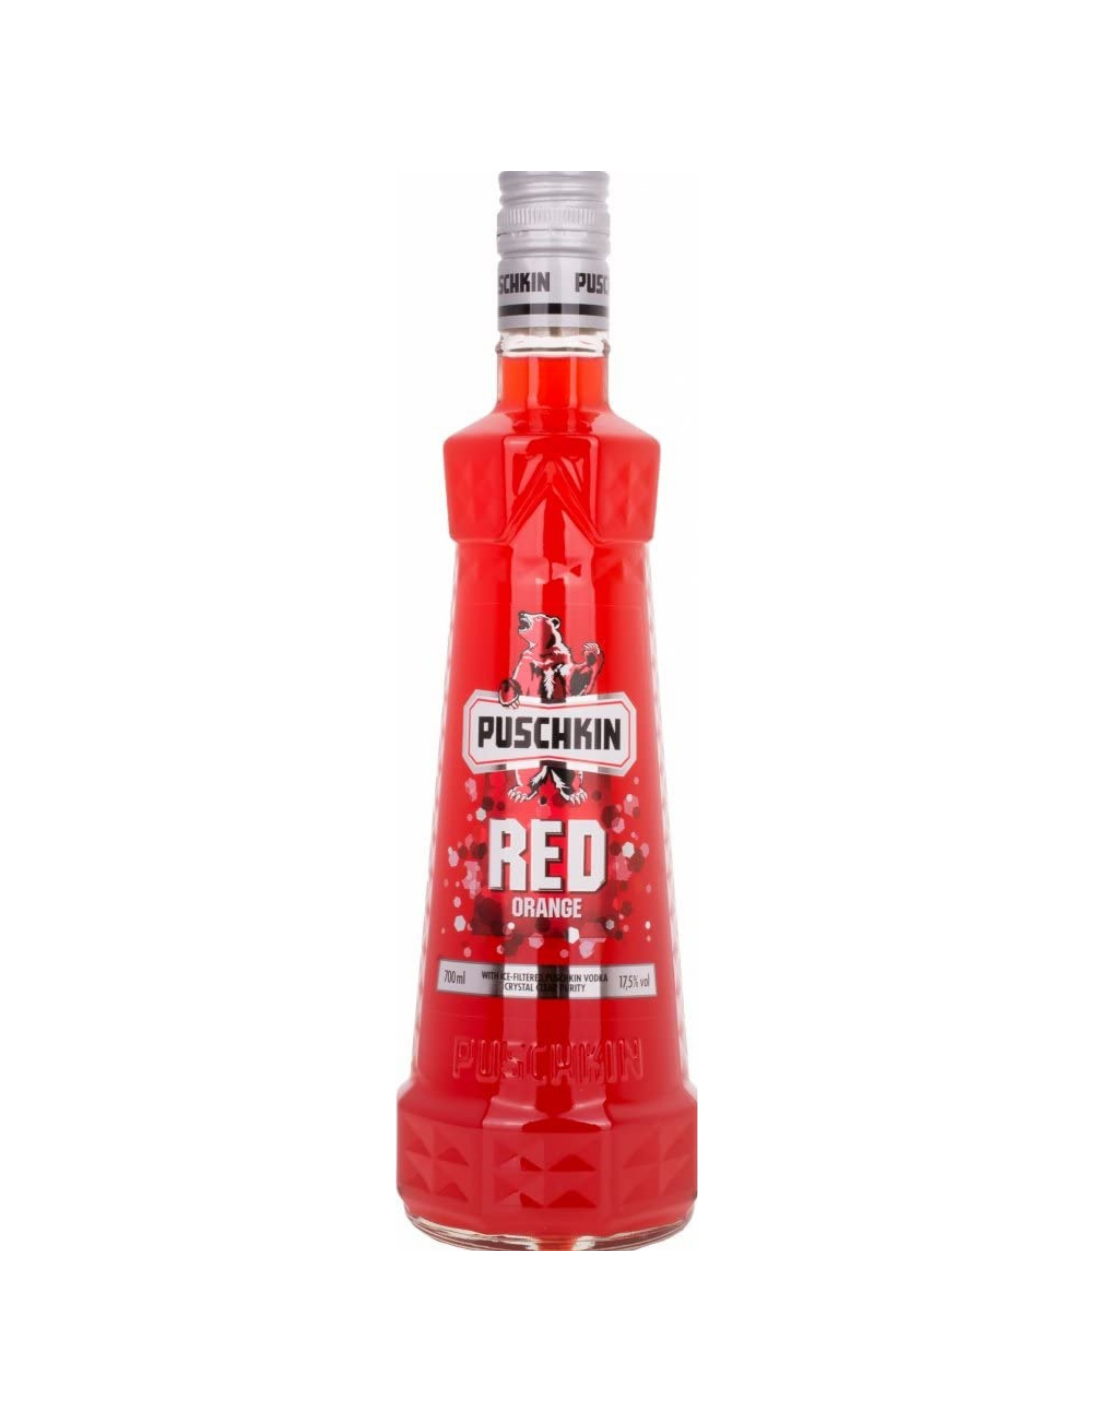 Vodca Puschkin Red Orange, 0.7L, 17.5% alc., Germania alcooldiscount.ro